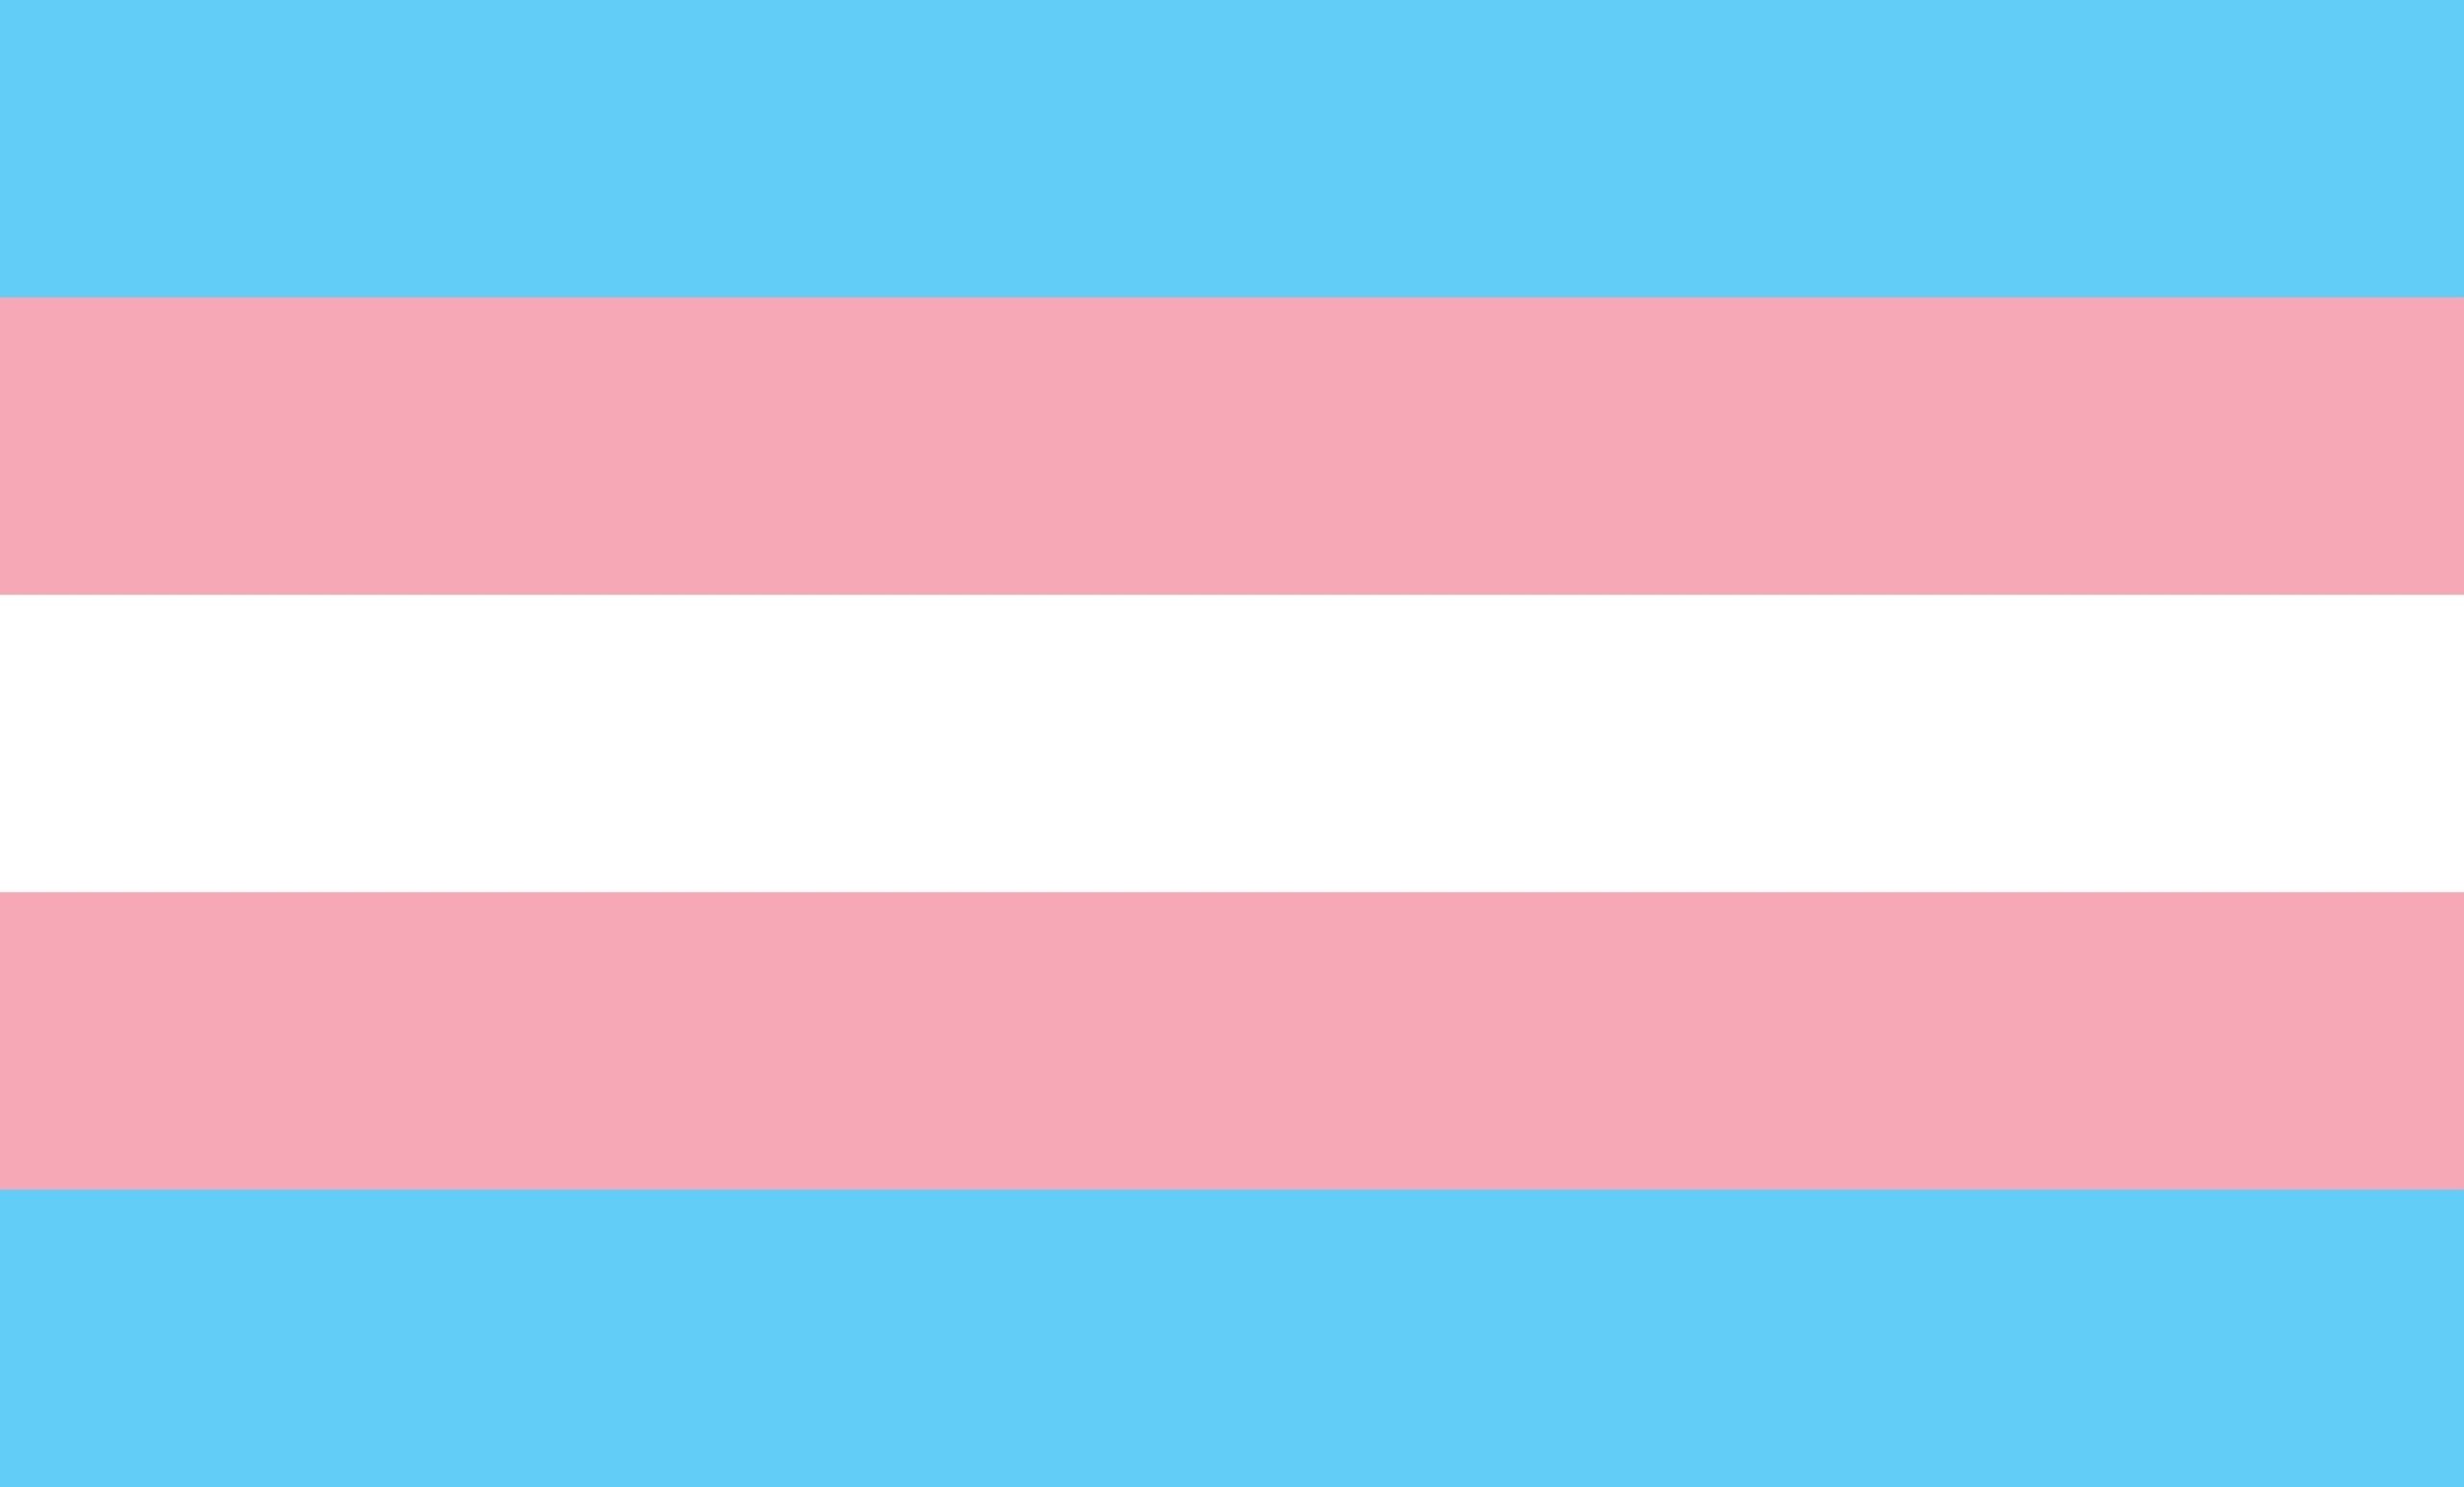 Transgender Pride Flag - colours blue, pink and white stripes